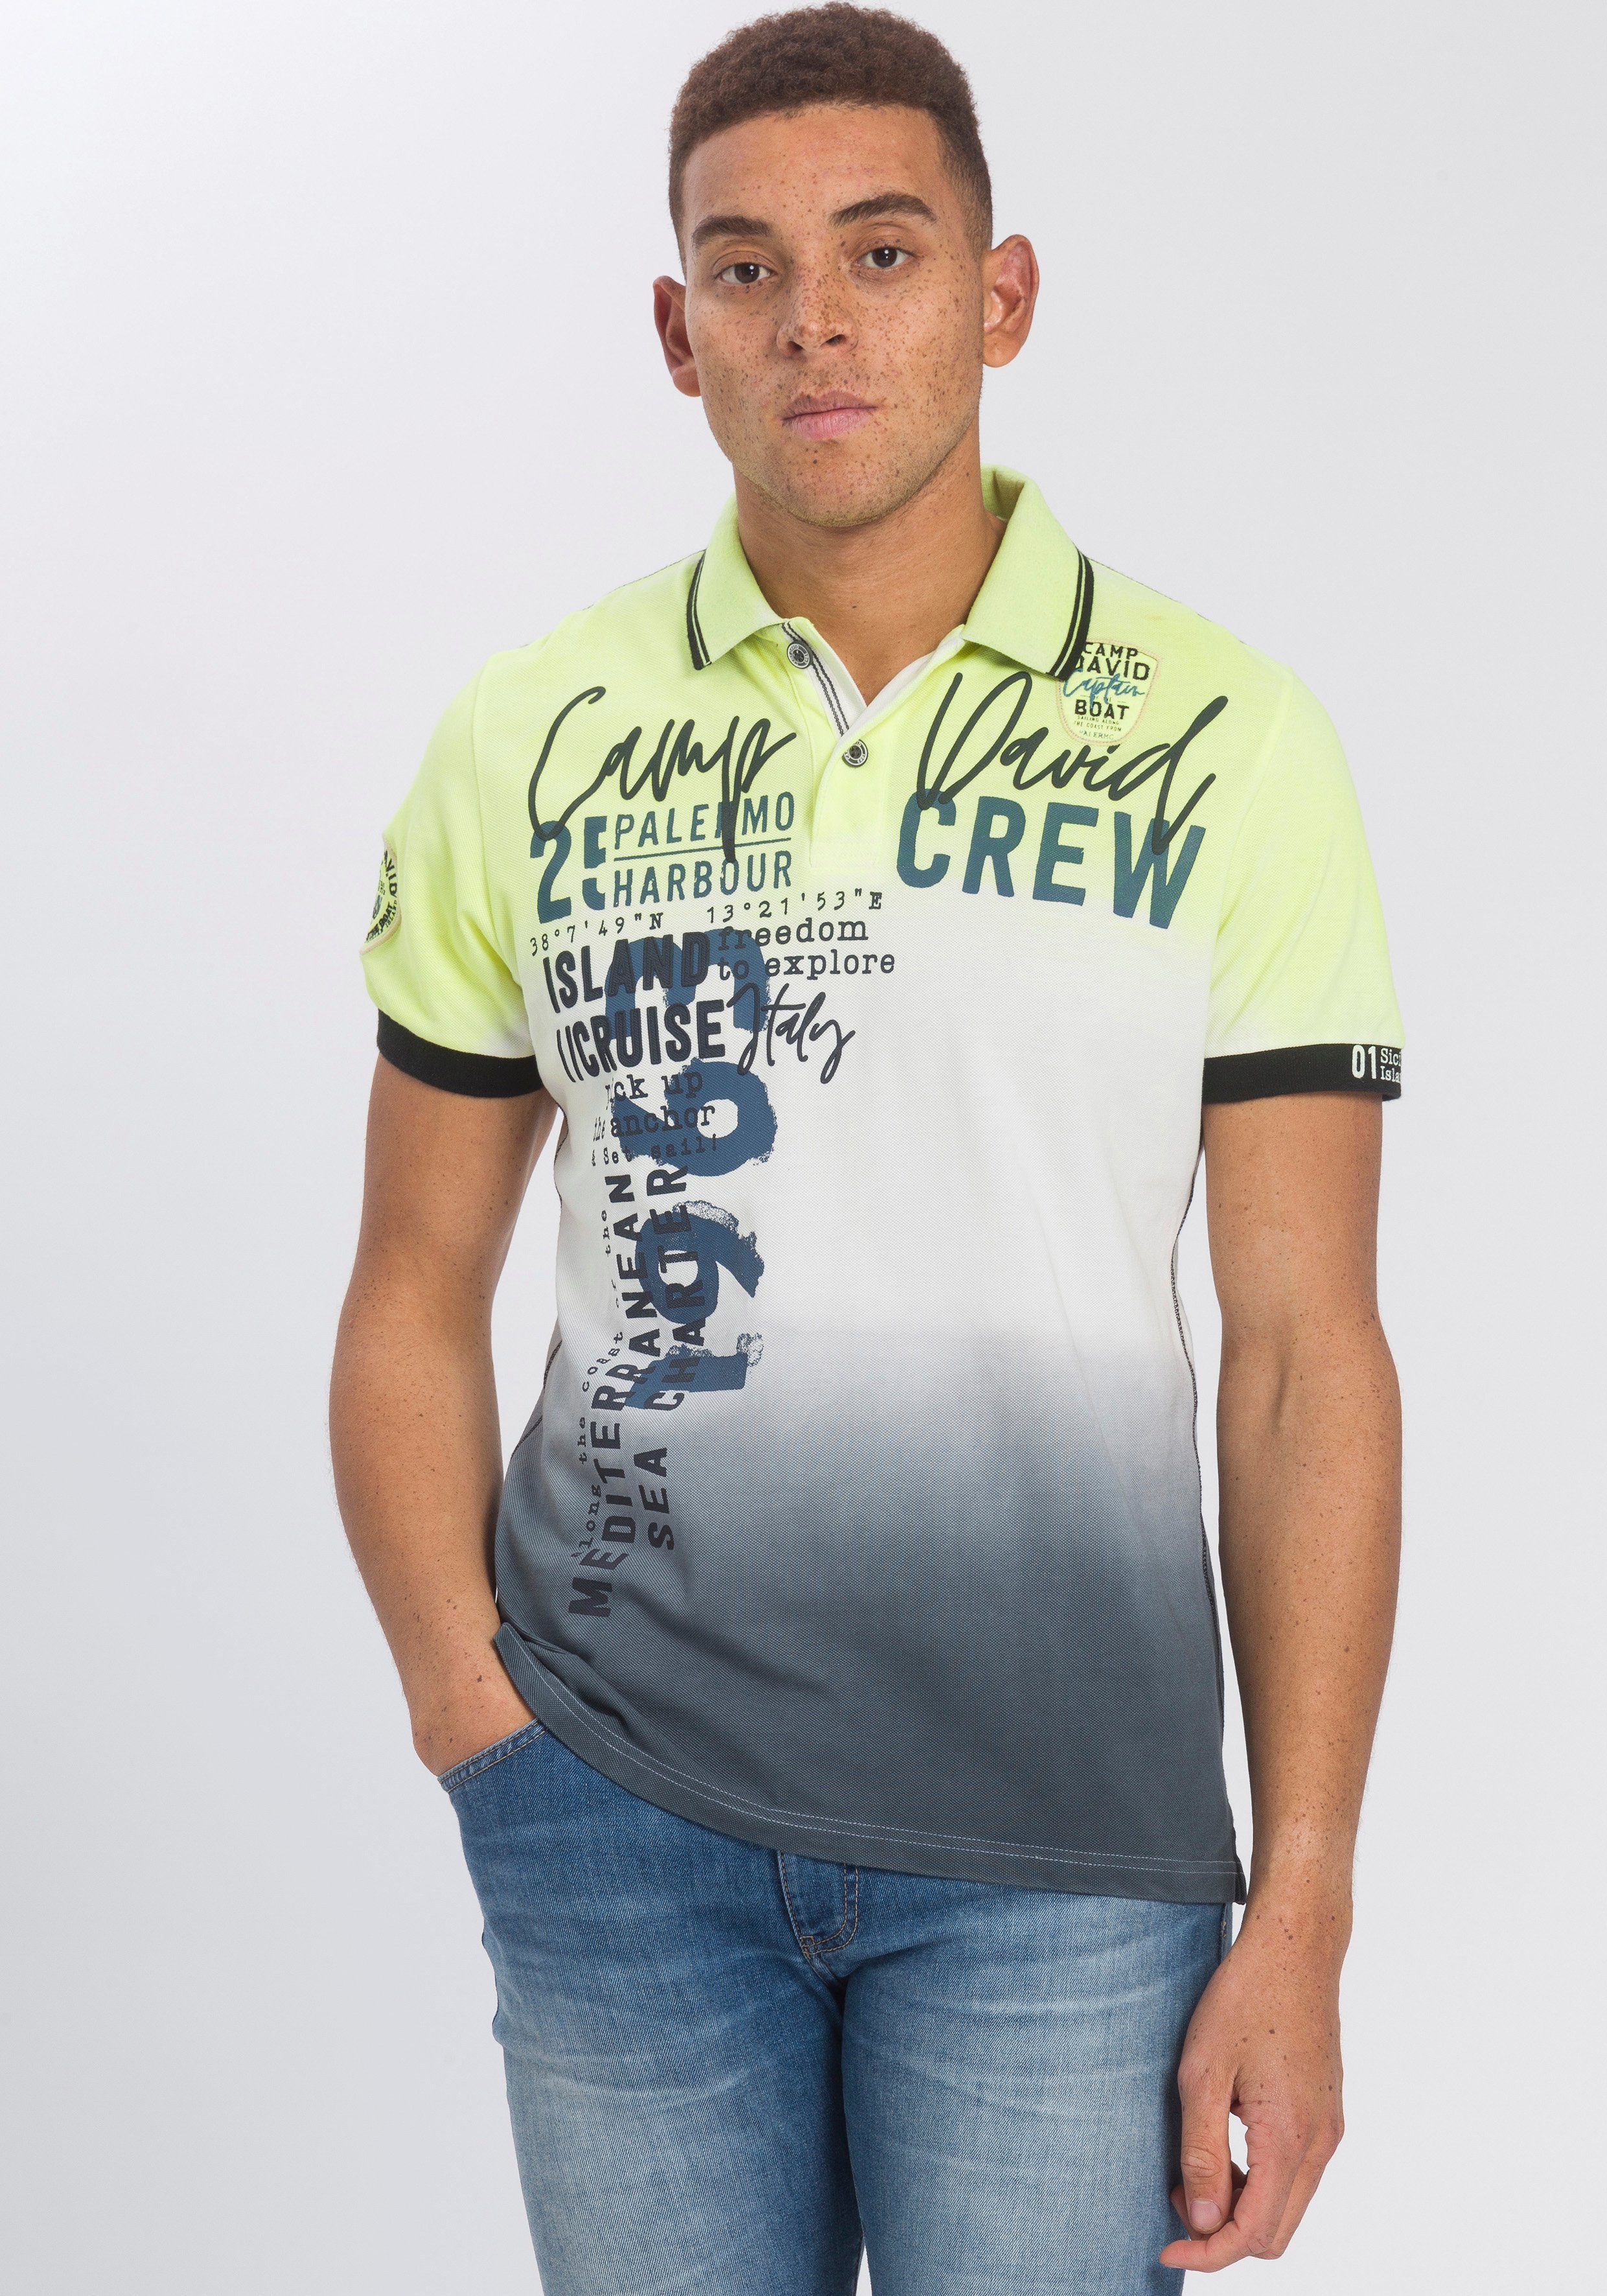 CAMP DAVID Poloshirt mit Farberverlauf kaufen | OTTO